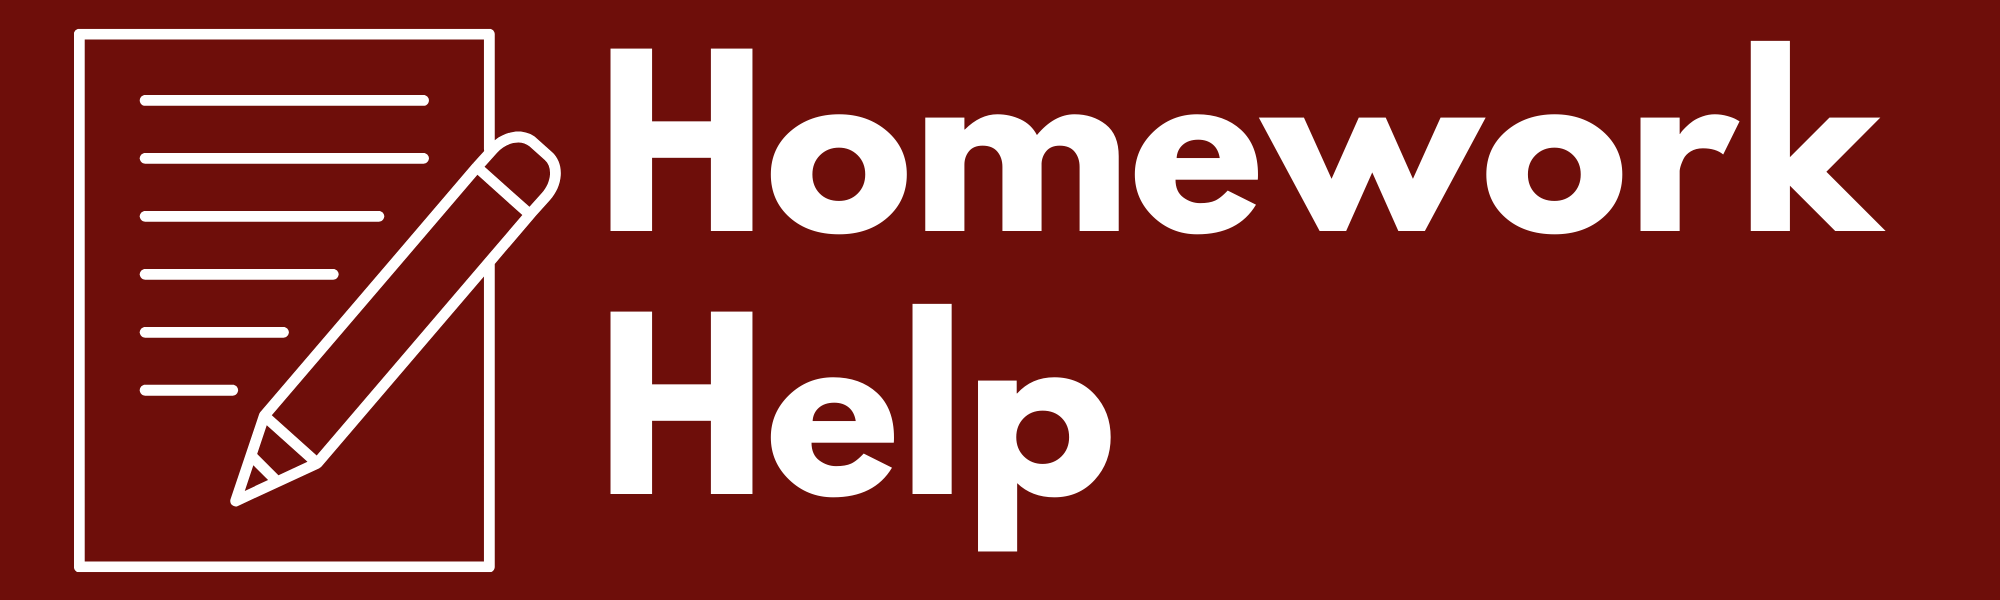 Homework Help Resource Link